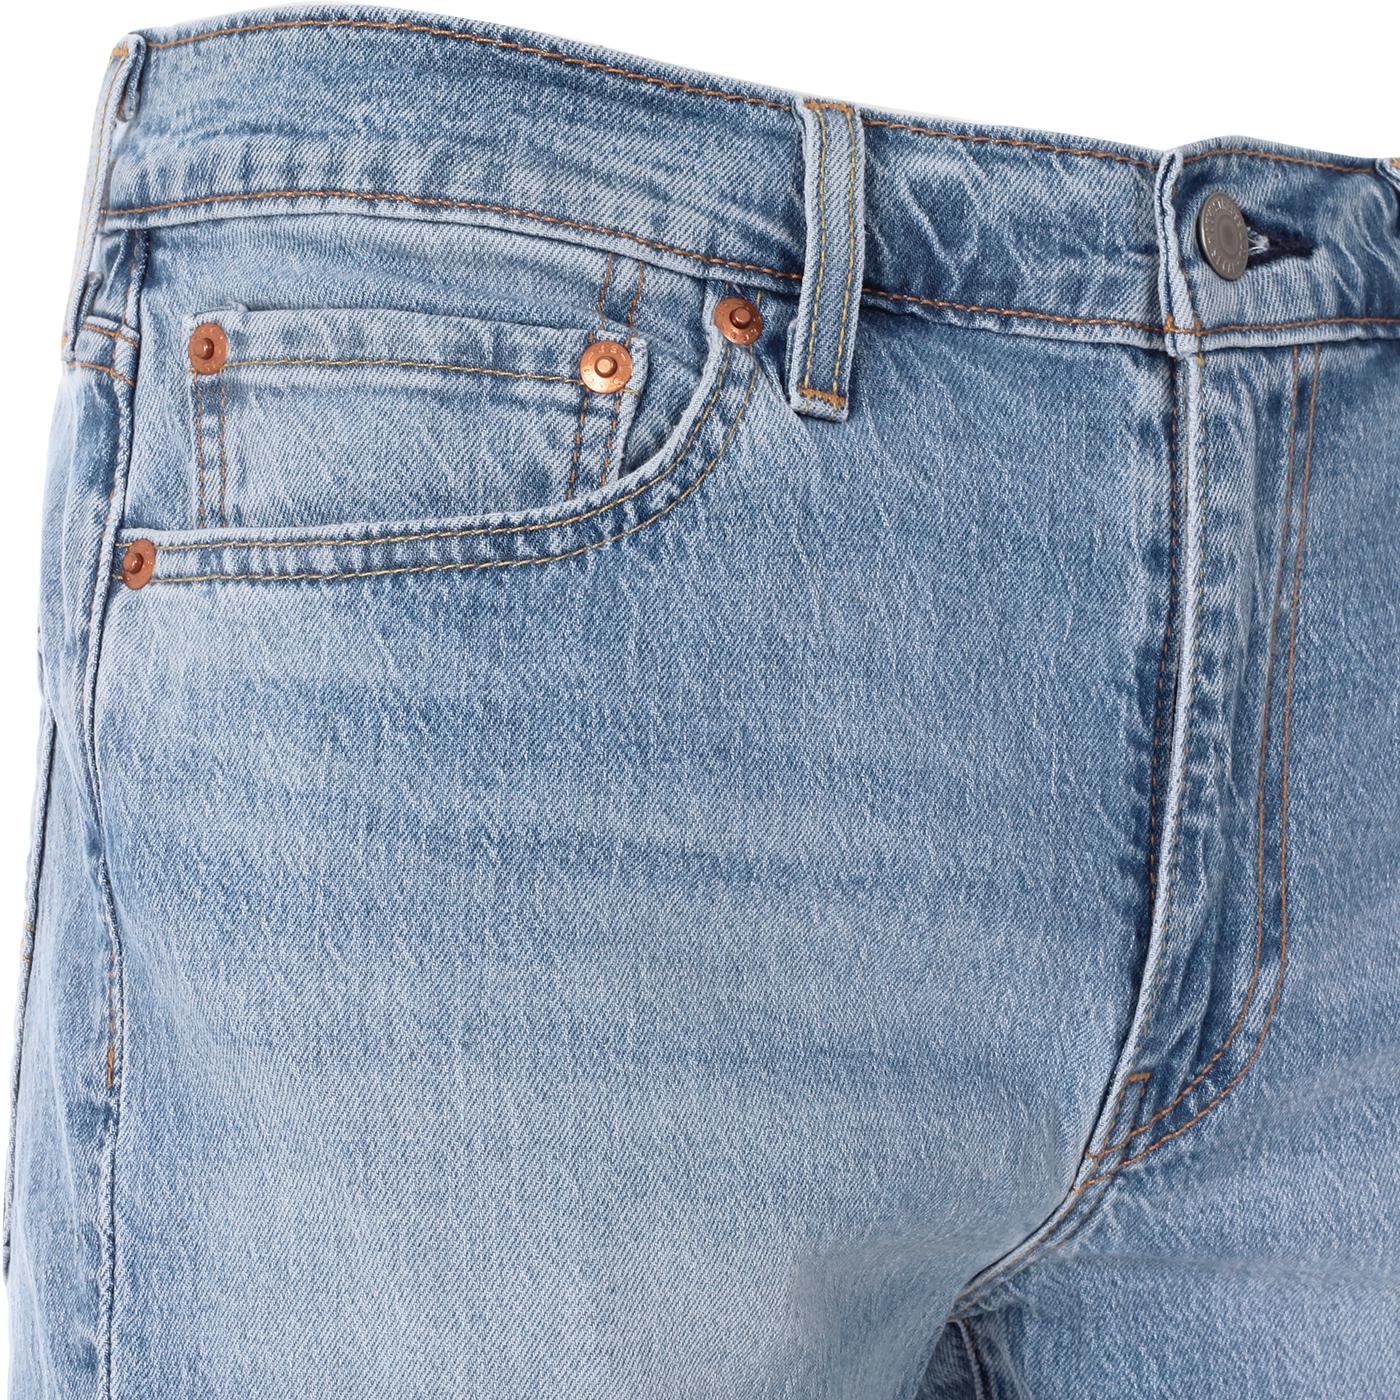 LEVI'S 511 Slim Retro Denim Jeans in Tabor Well Worn